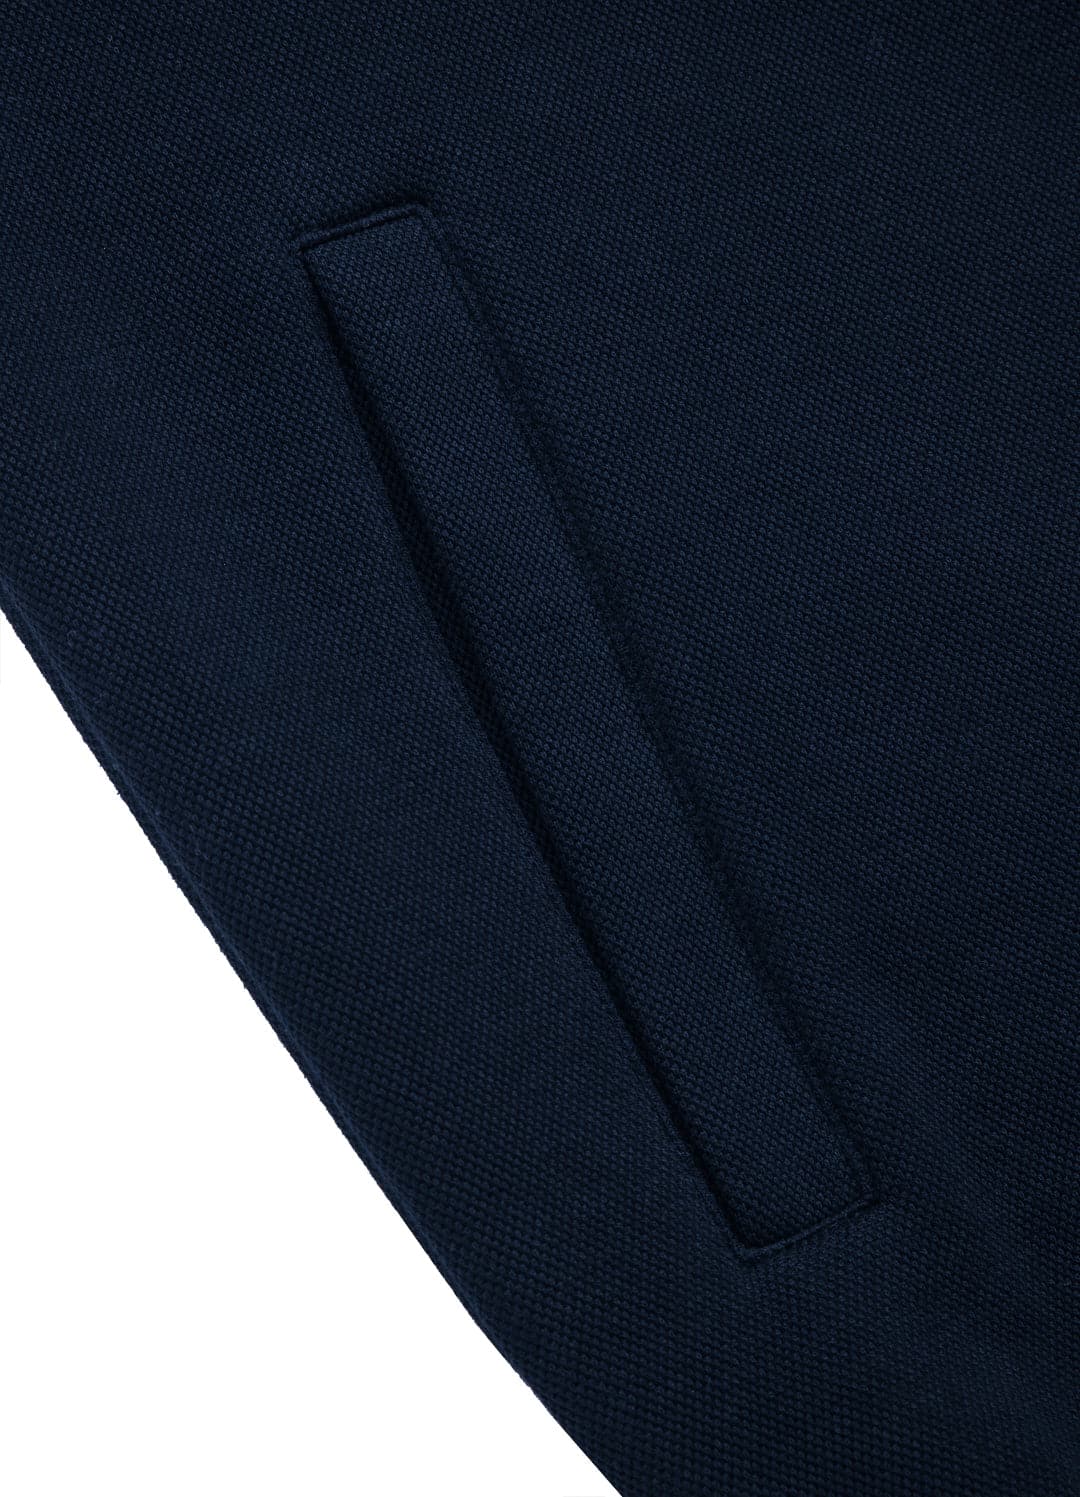 Bluza rozpinana z kapturem Premium Pique NEW LOGO Granatowa - Pitbull West Coast International Store 